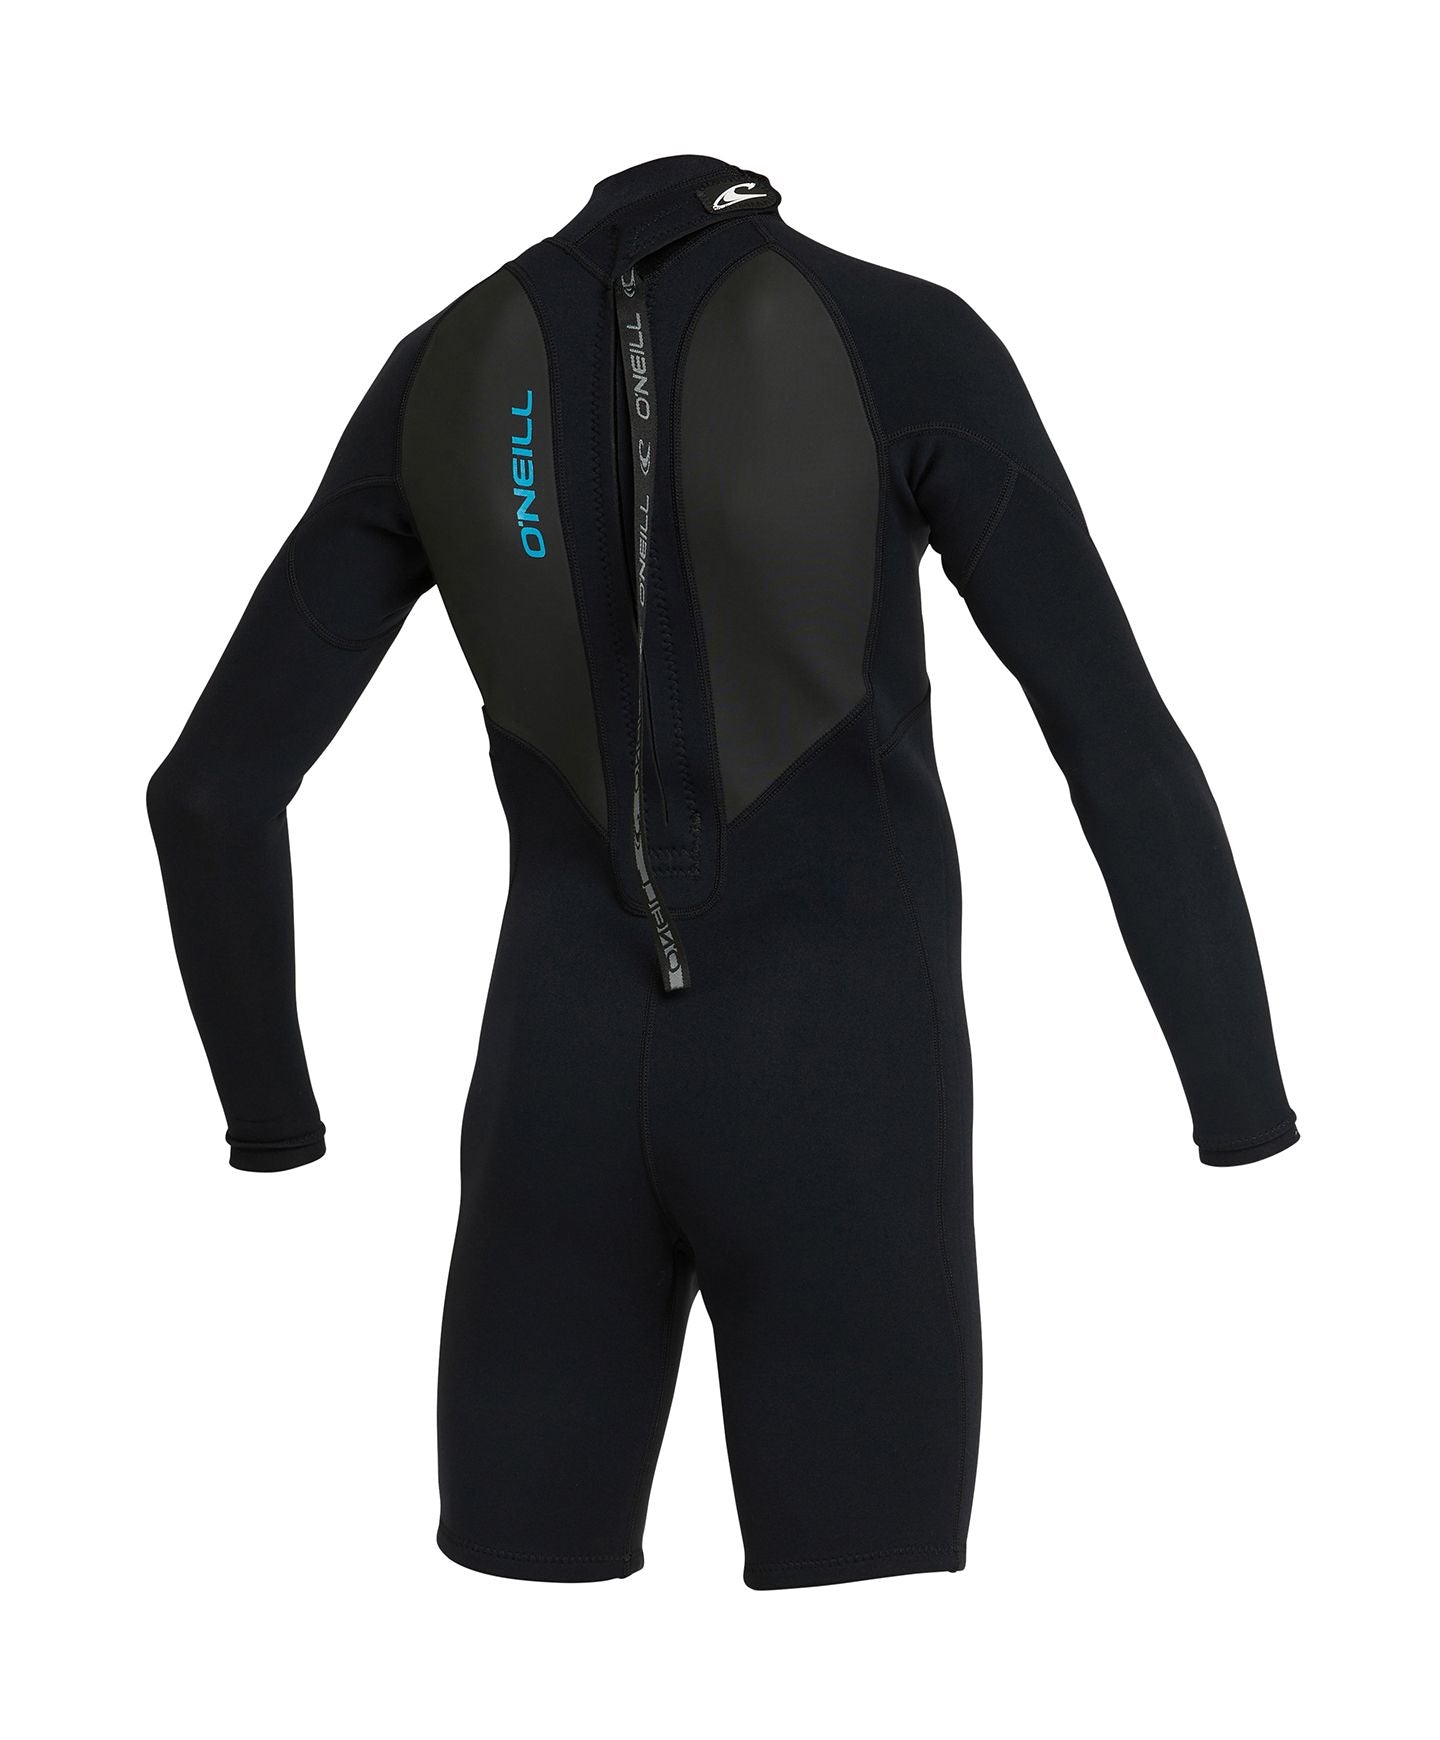 Boy's Reactor 2 BZ Long Sleeve Spring Suit 2mm Wetsuit - Black